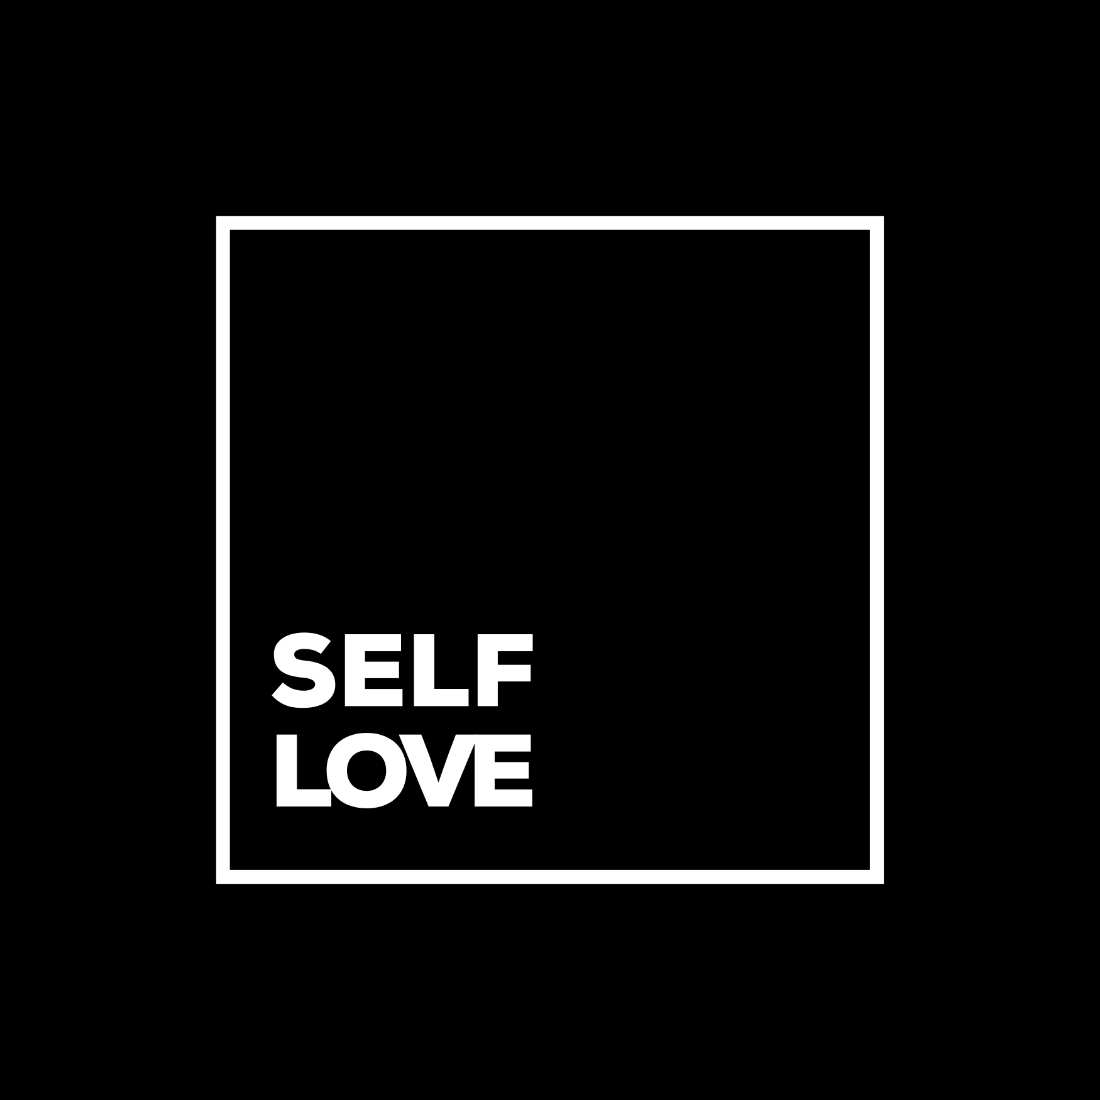 Self Love Design SVG, PNG cover image.